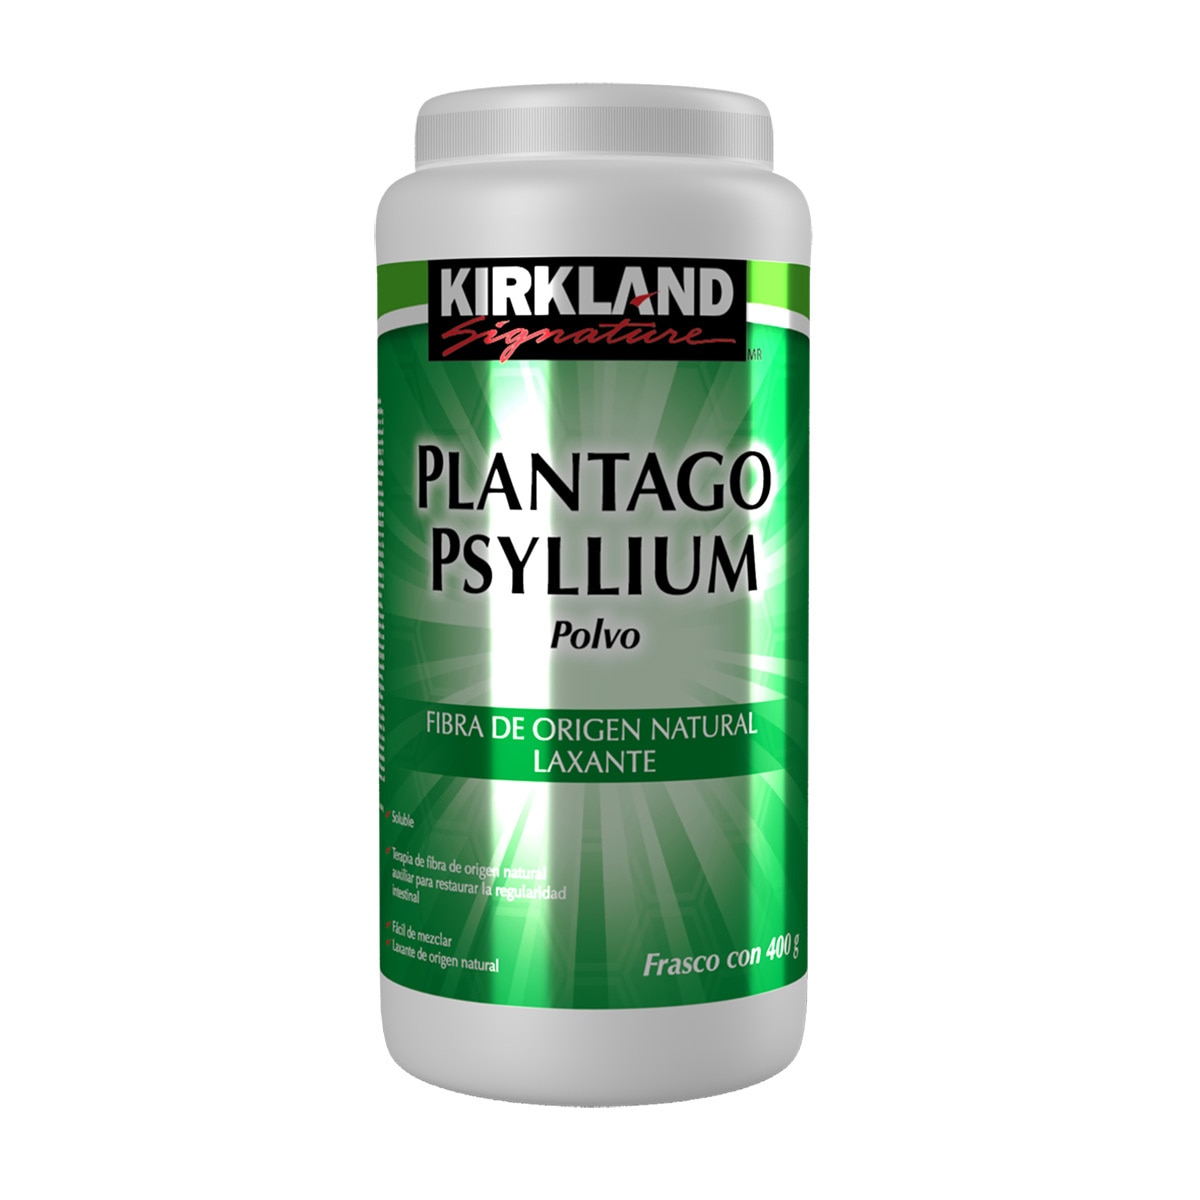 Kirkland Signature Psyllium Plantago Frasco con 400g de Polvo Sabor Natural